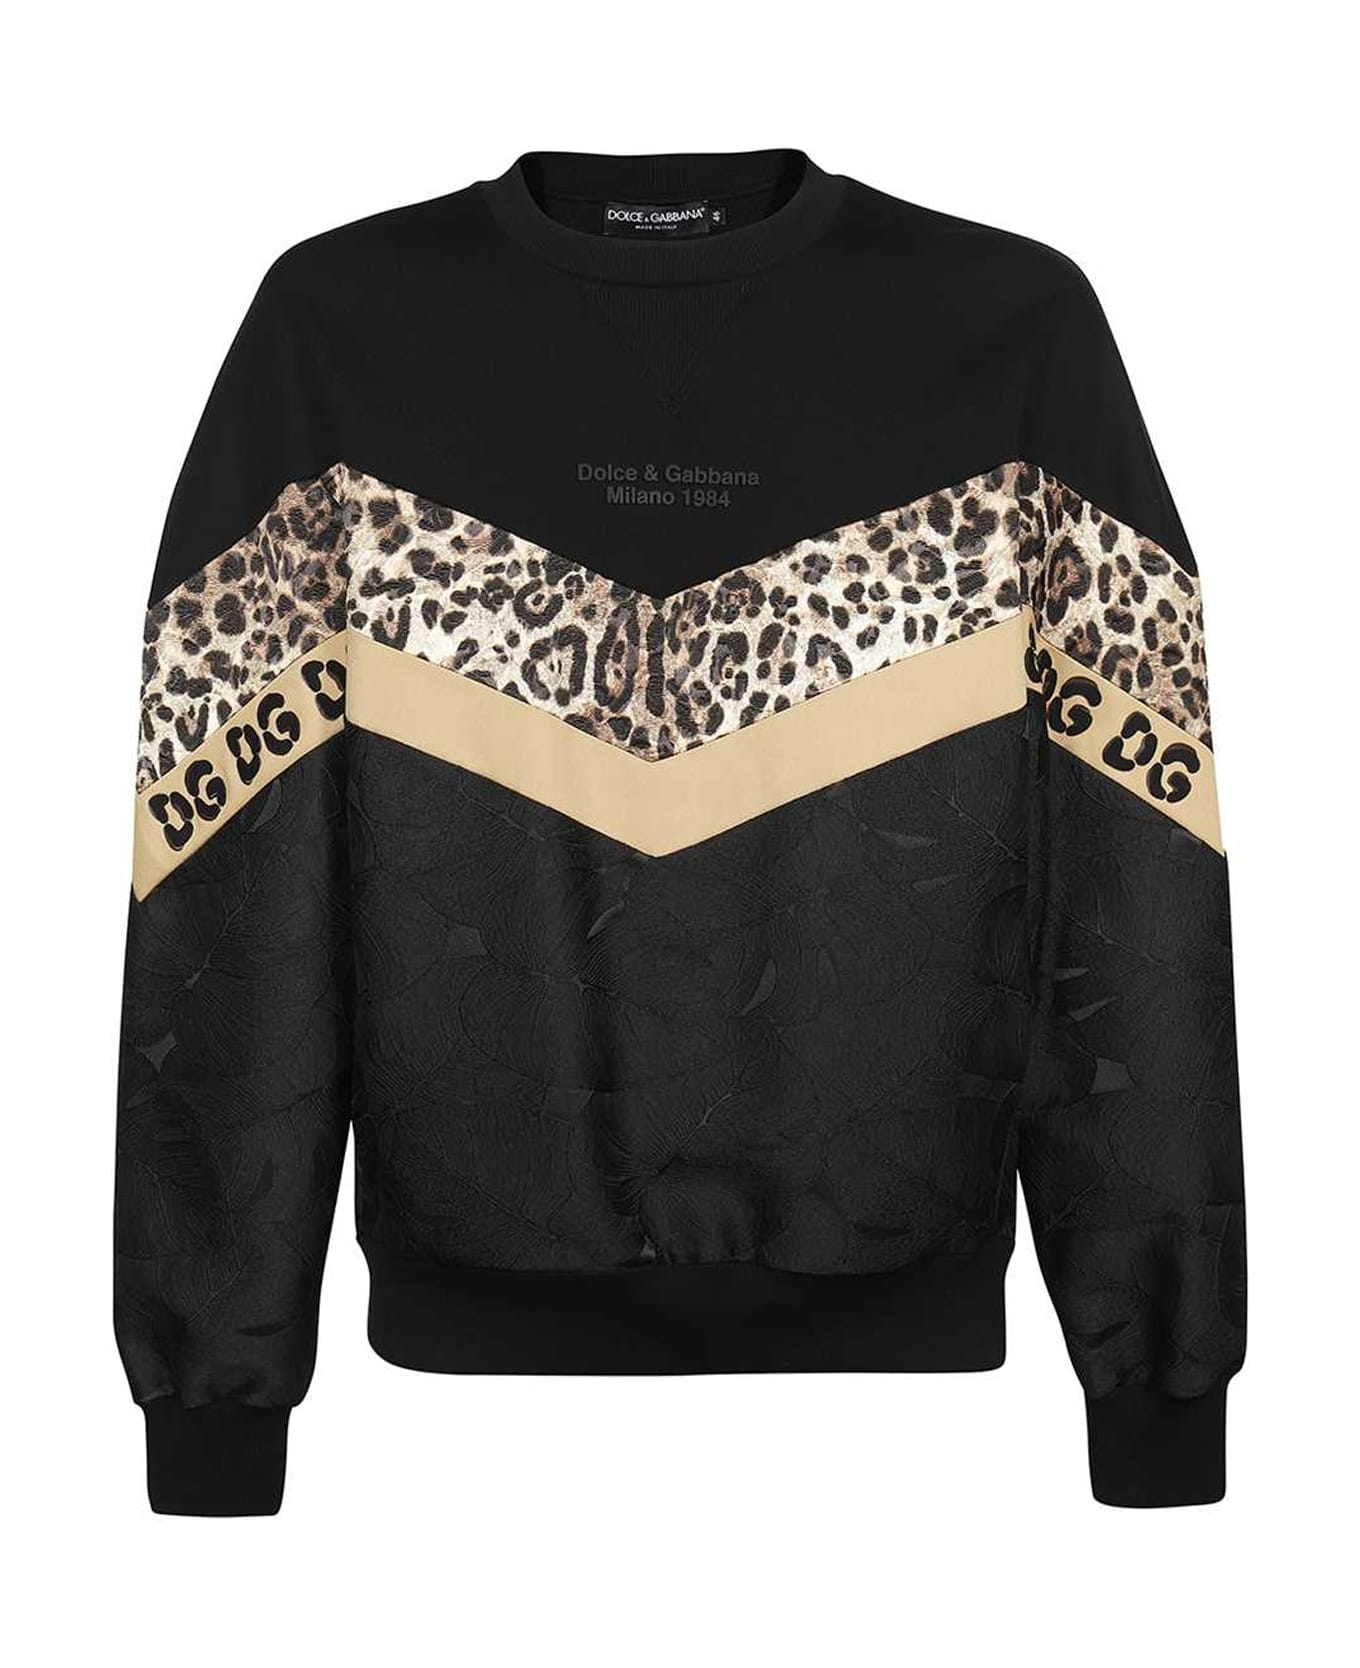 Dolce & Gabbana Printed Sweatshirt - Black フリース